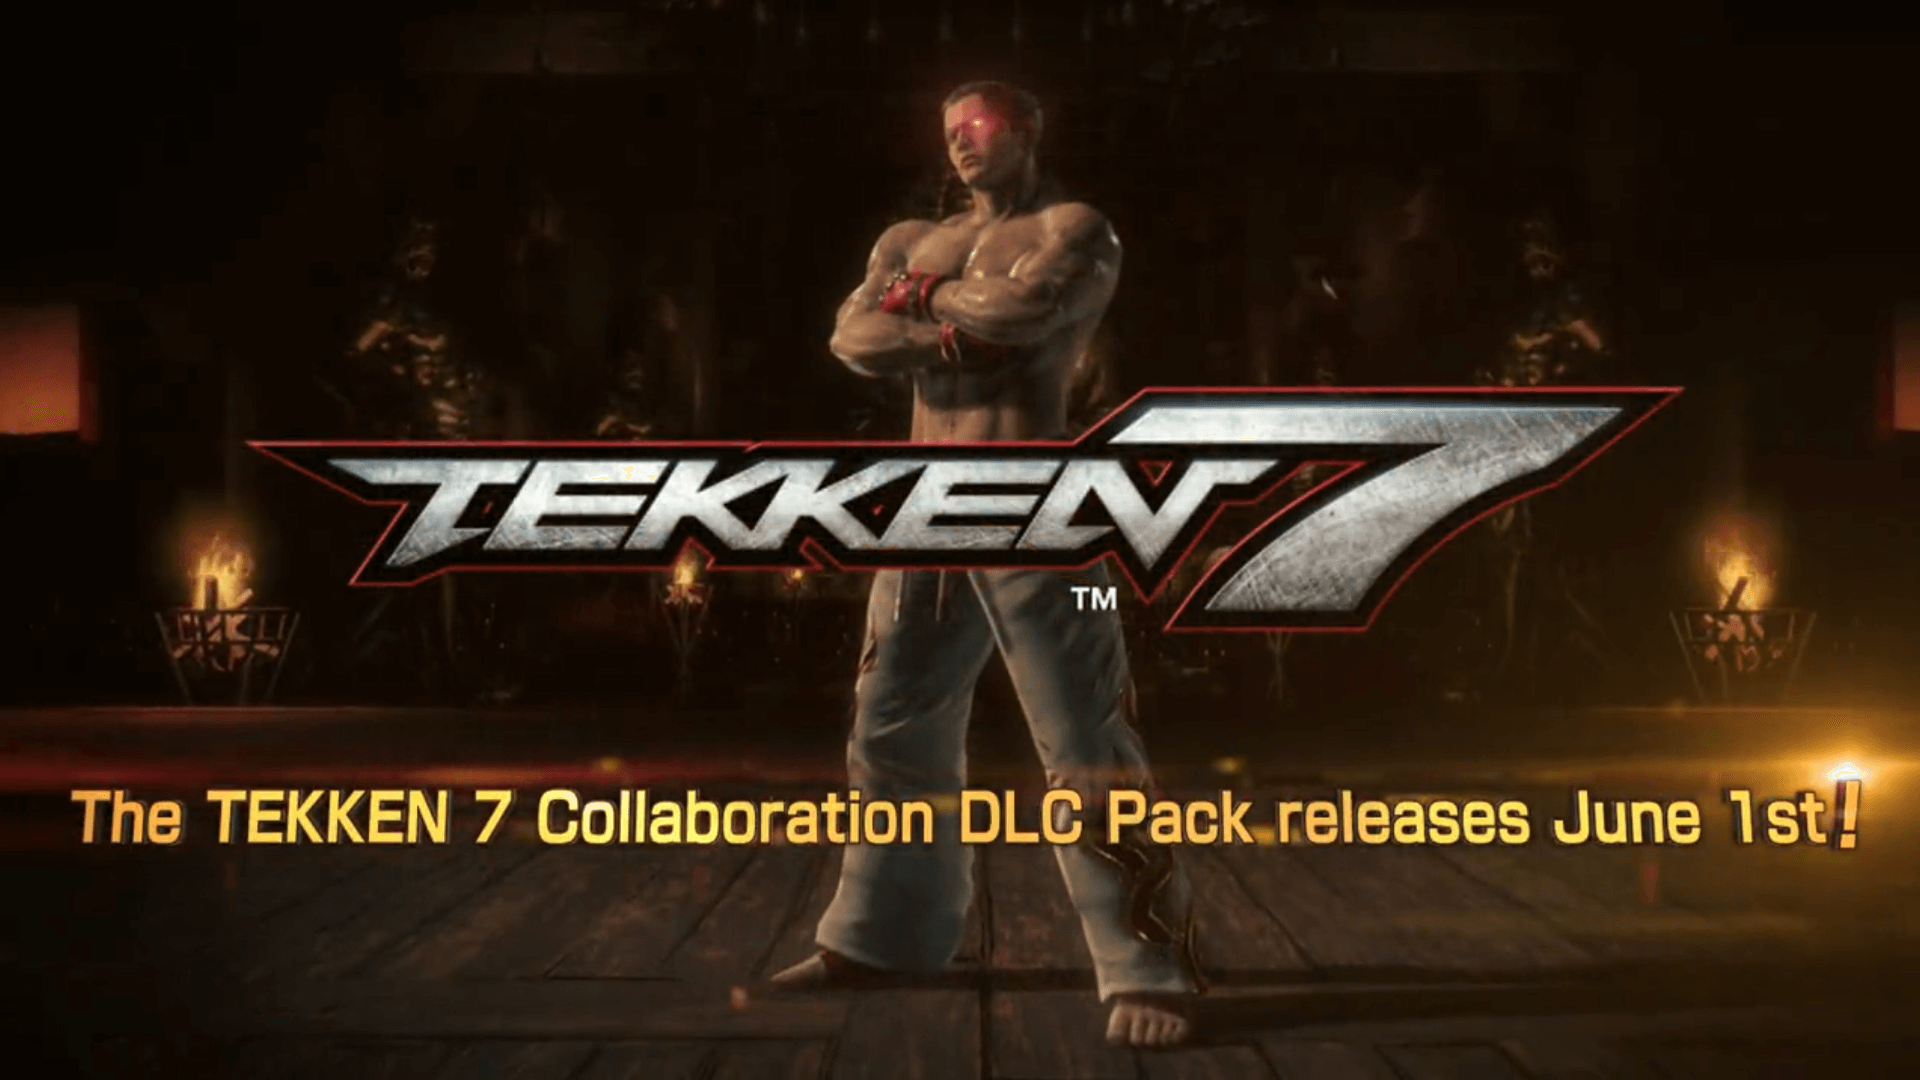 Virtual Fighter 5& Tekken 7 collaboration pack coming June 1st